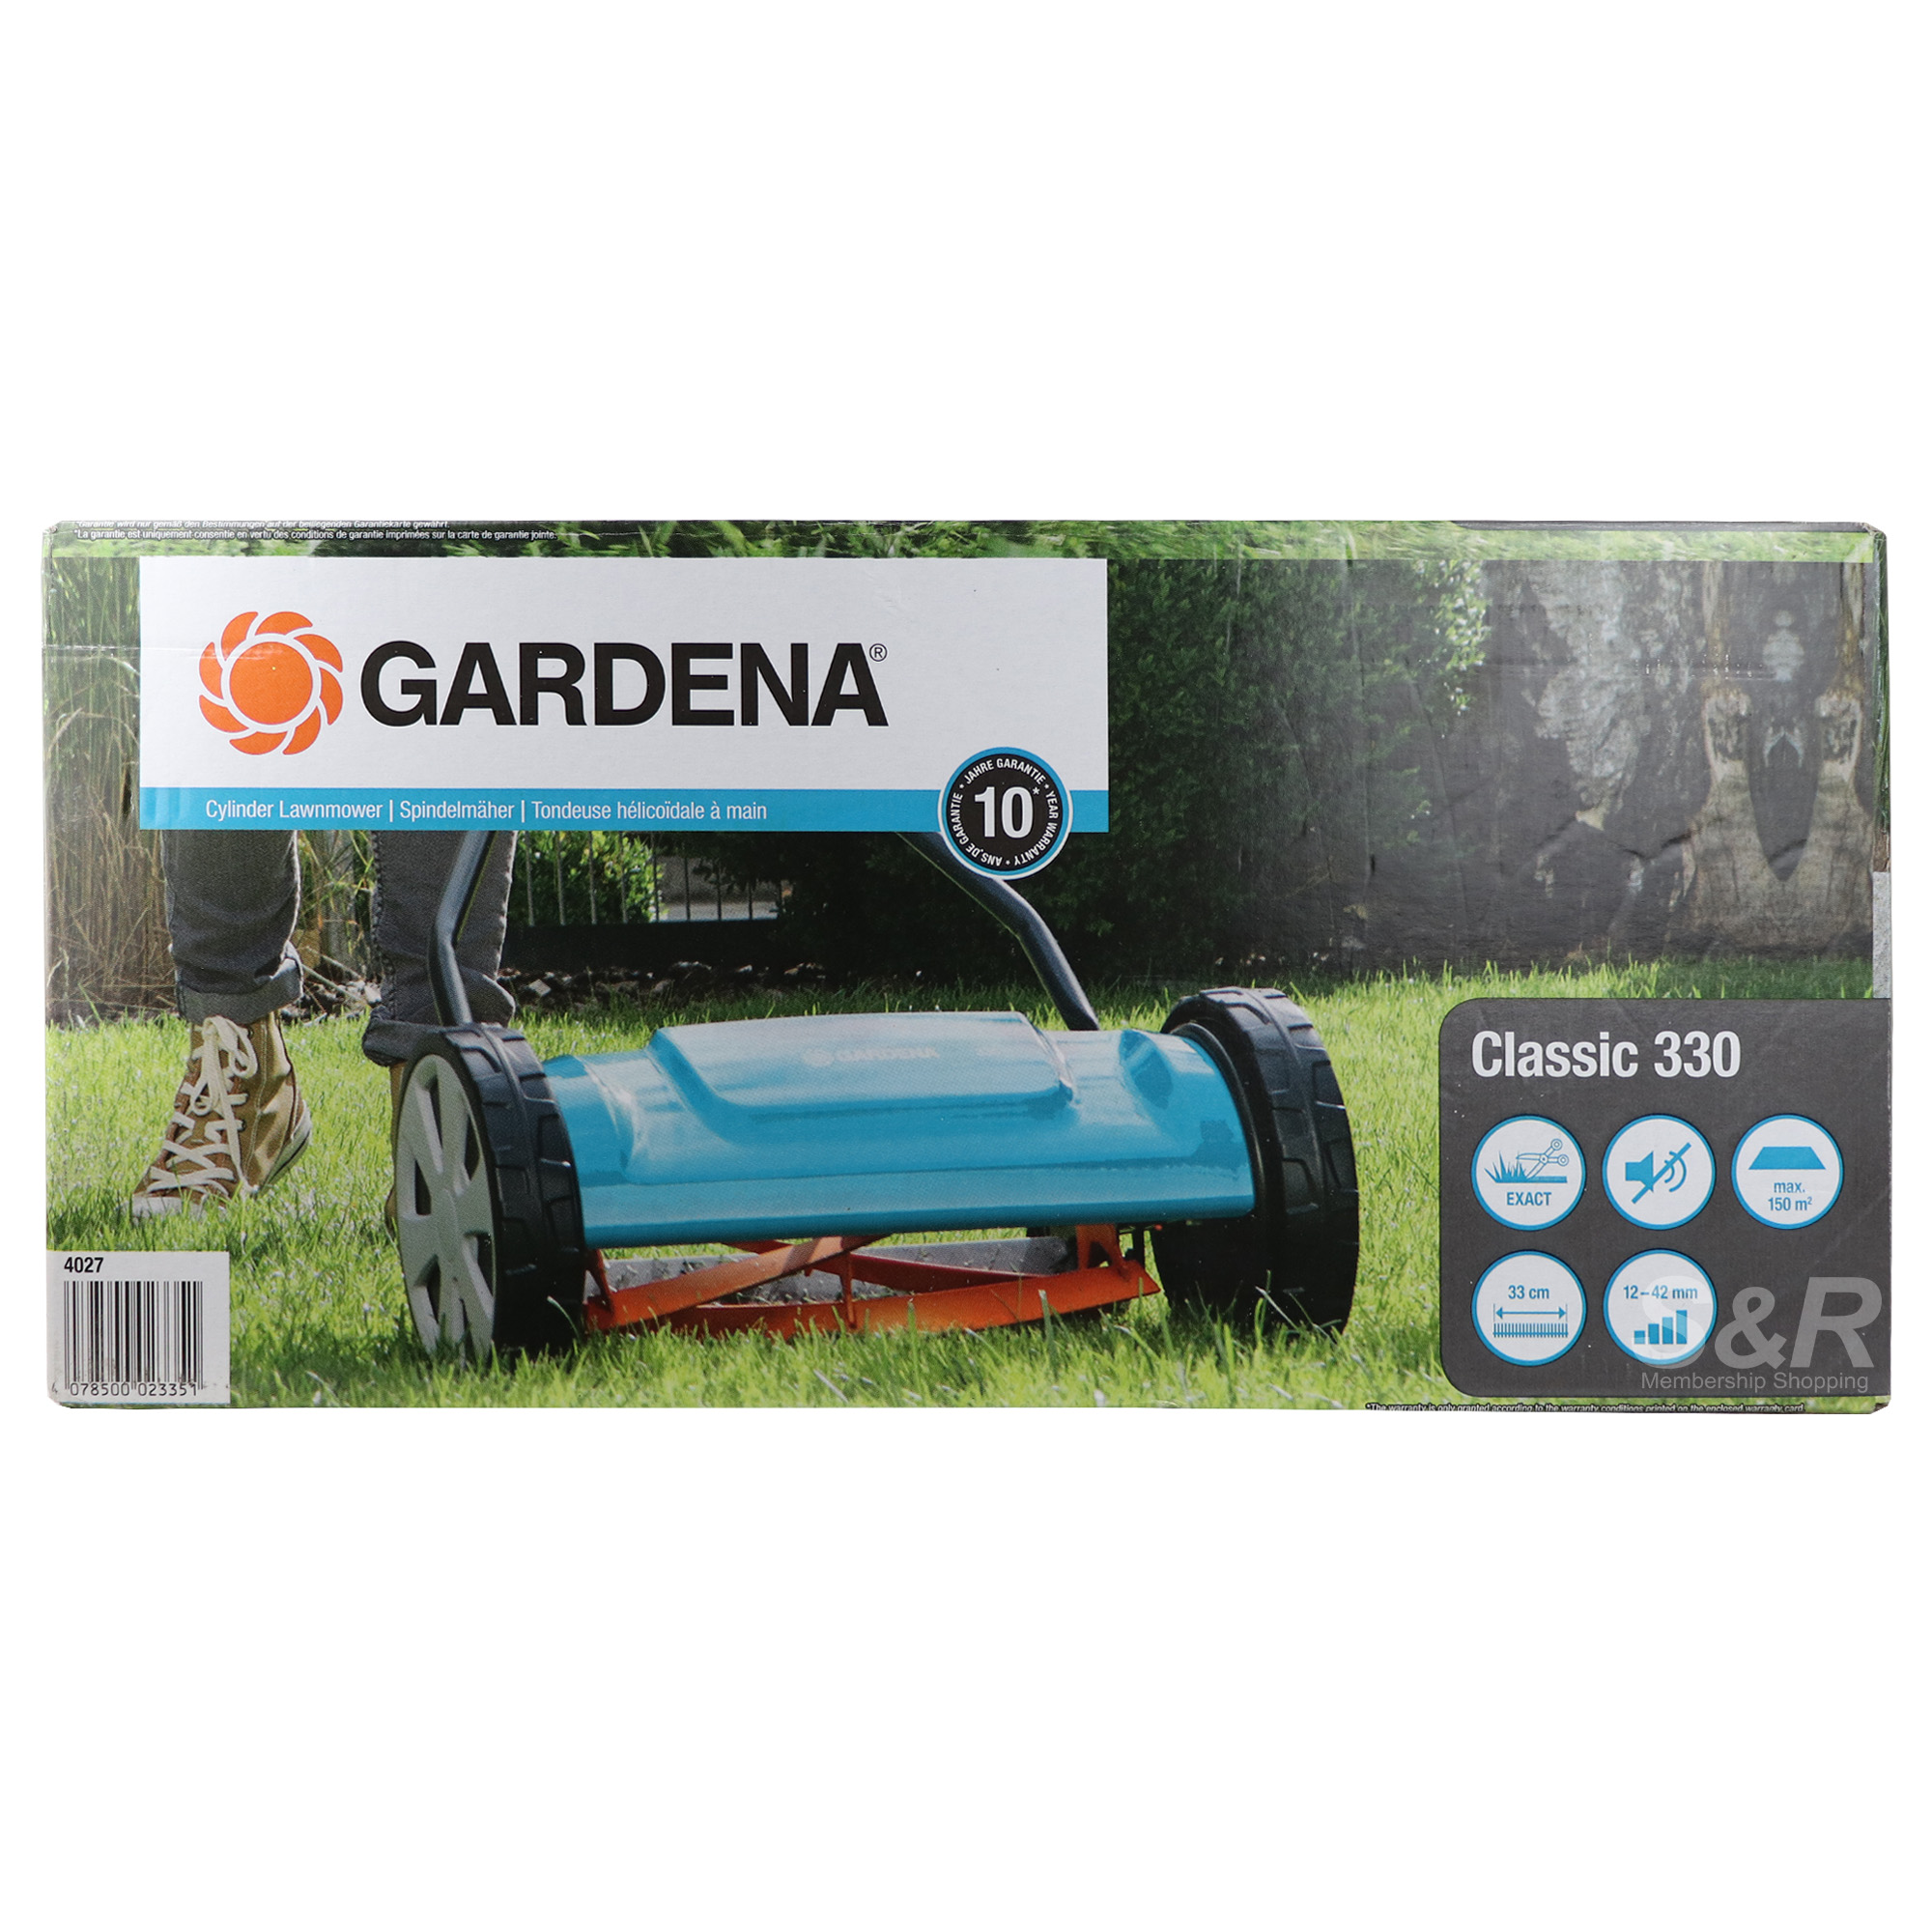 Gardena Classic 330 Cylinder Lawnmower